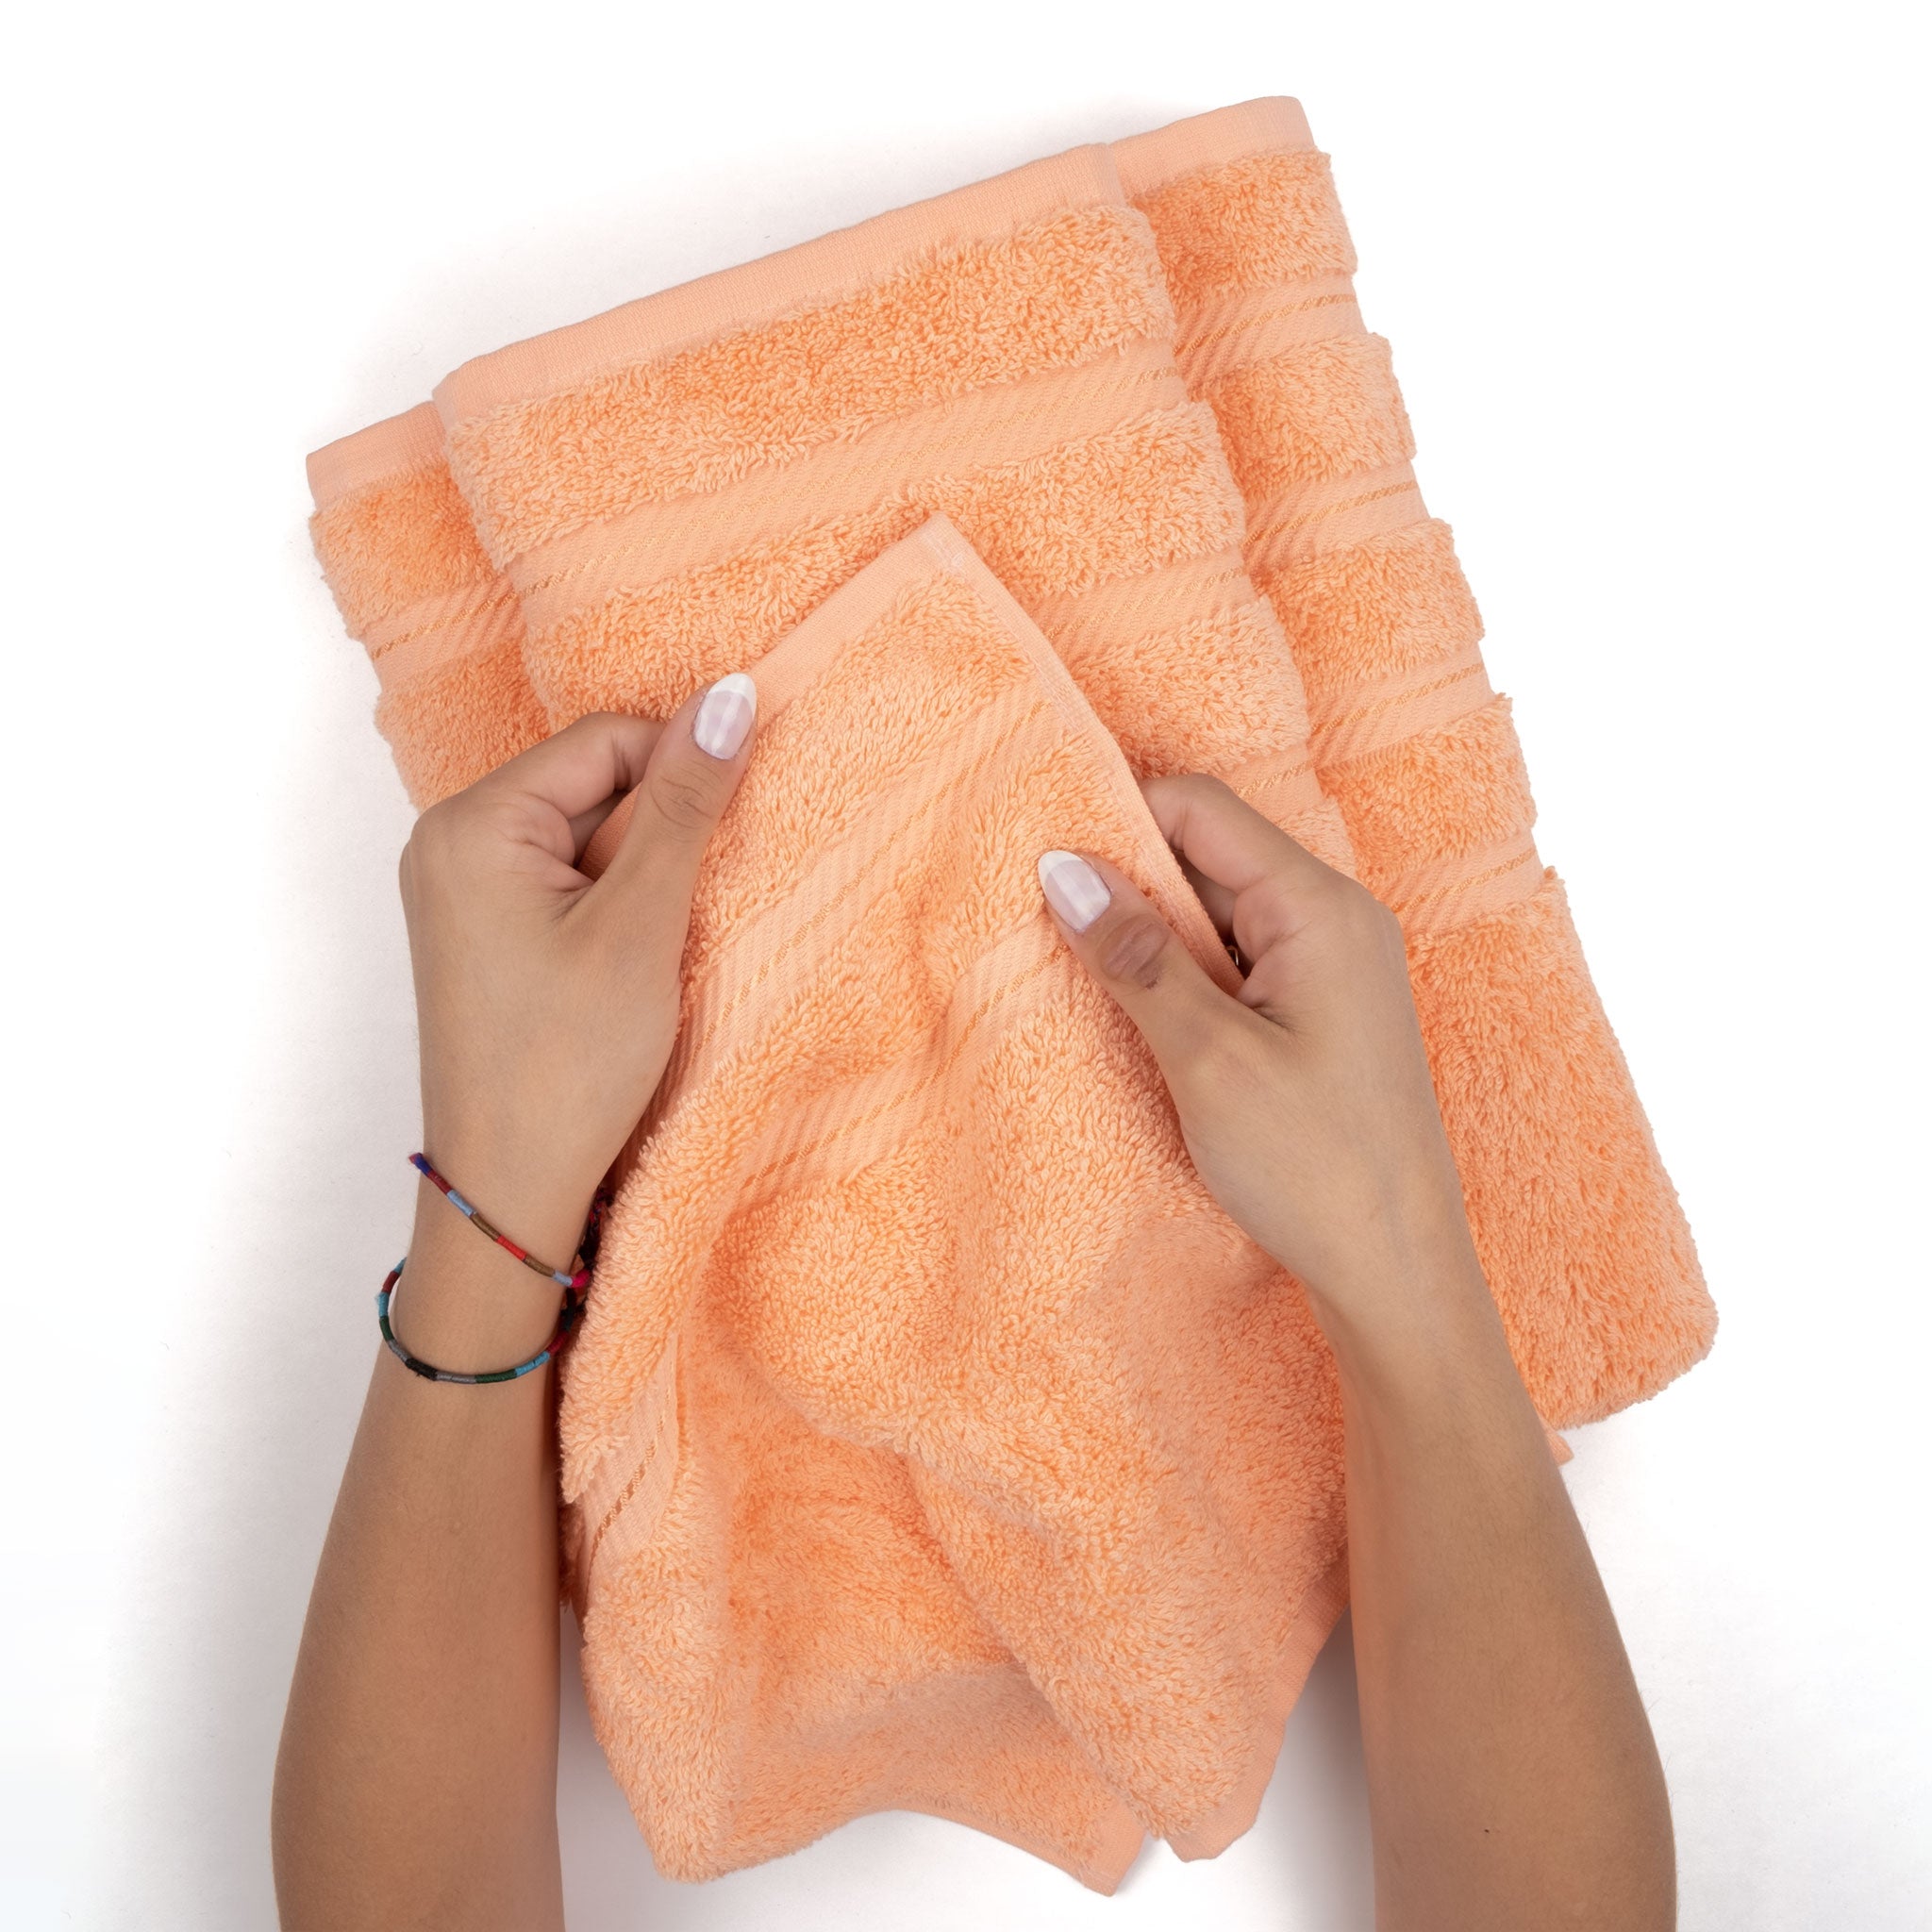 American Soft Linen - 35x70 Jumbo Bath Sheet Turkish Bath Towel - 16 Piece Case Pack - Malibu-Peach - 4